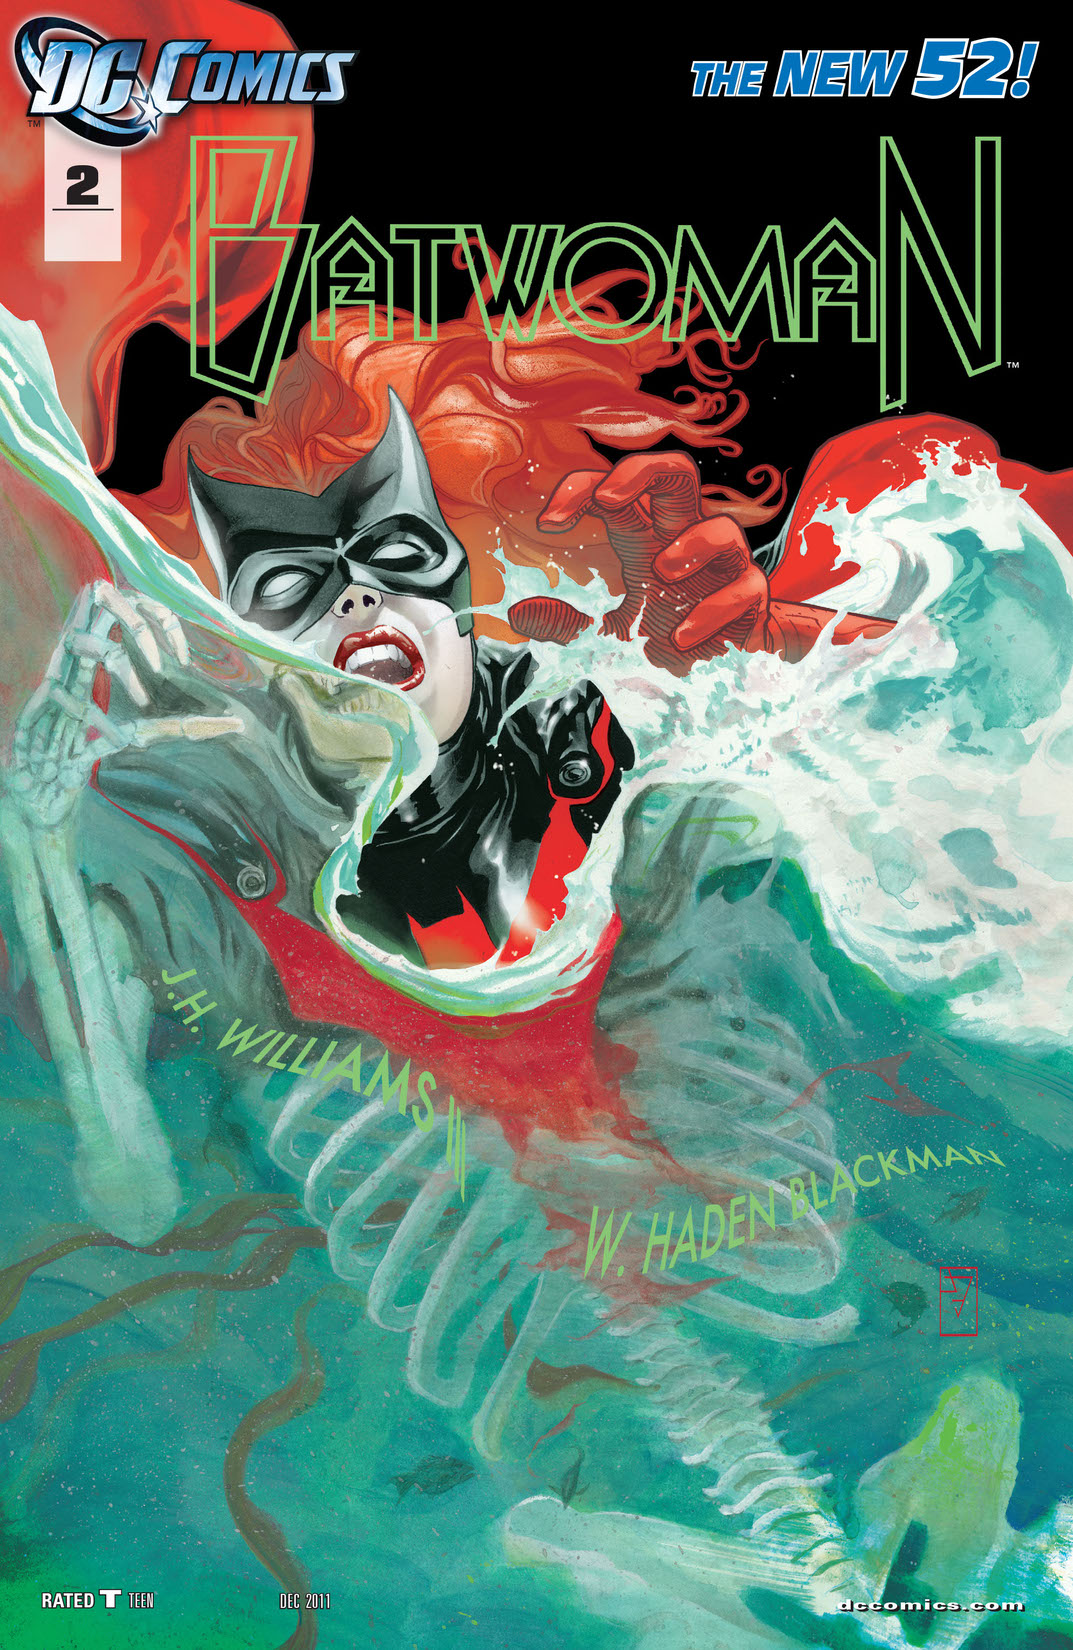 Batwoman (2011-) #2 preview images